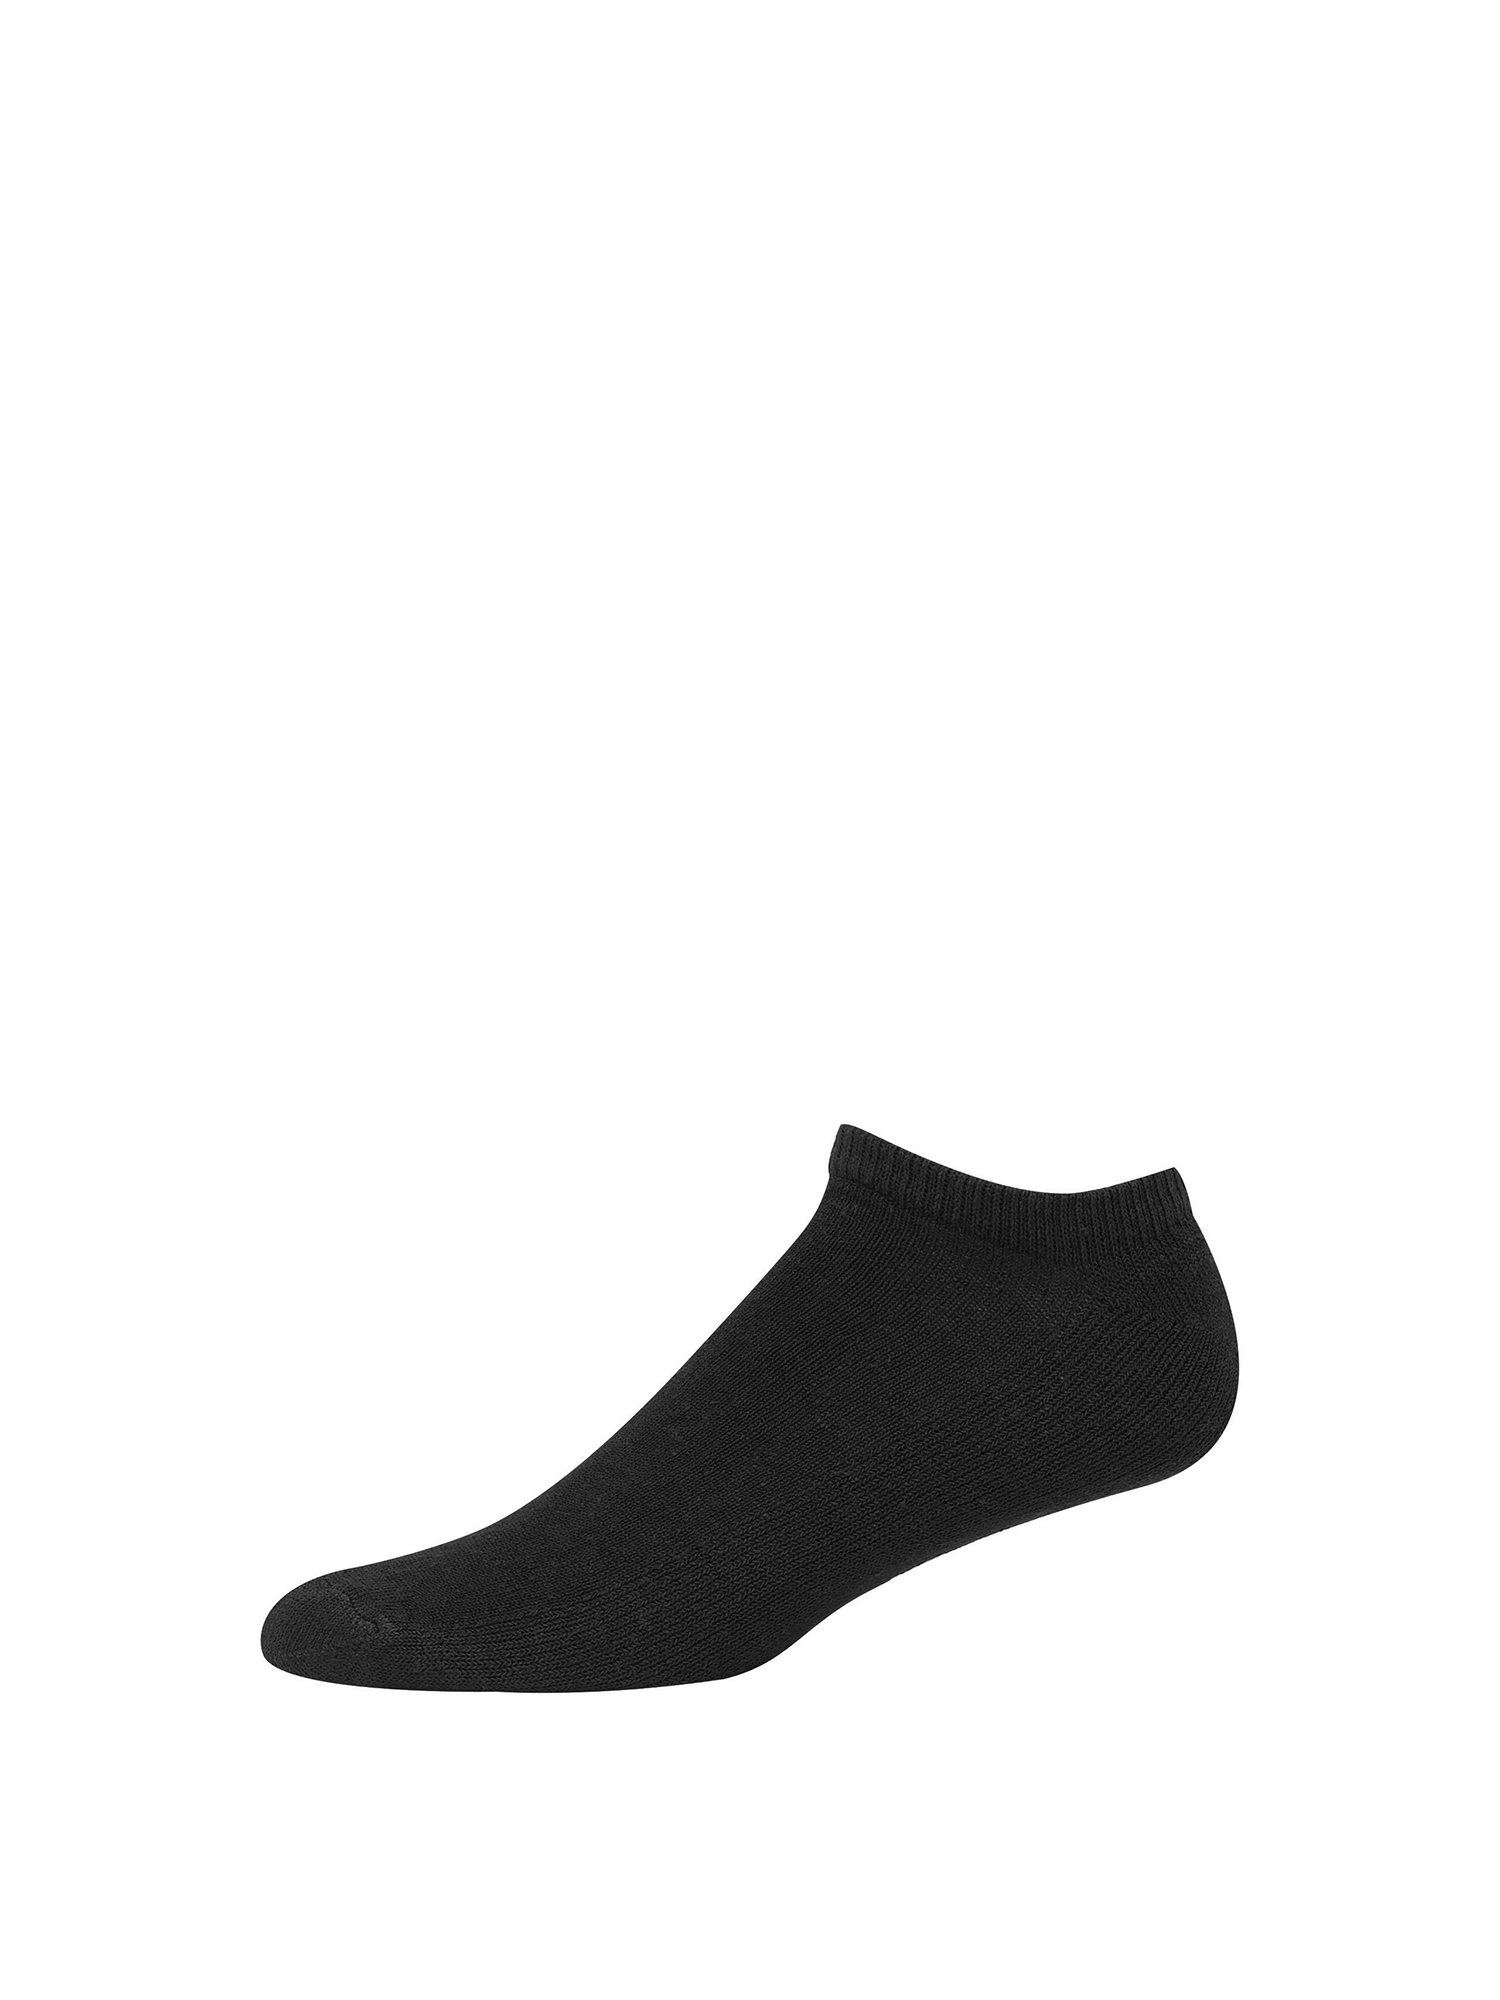 Hanes Men's Cushion No Show Socks, 12 Pack - image 3 of 8